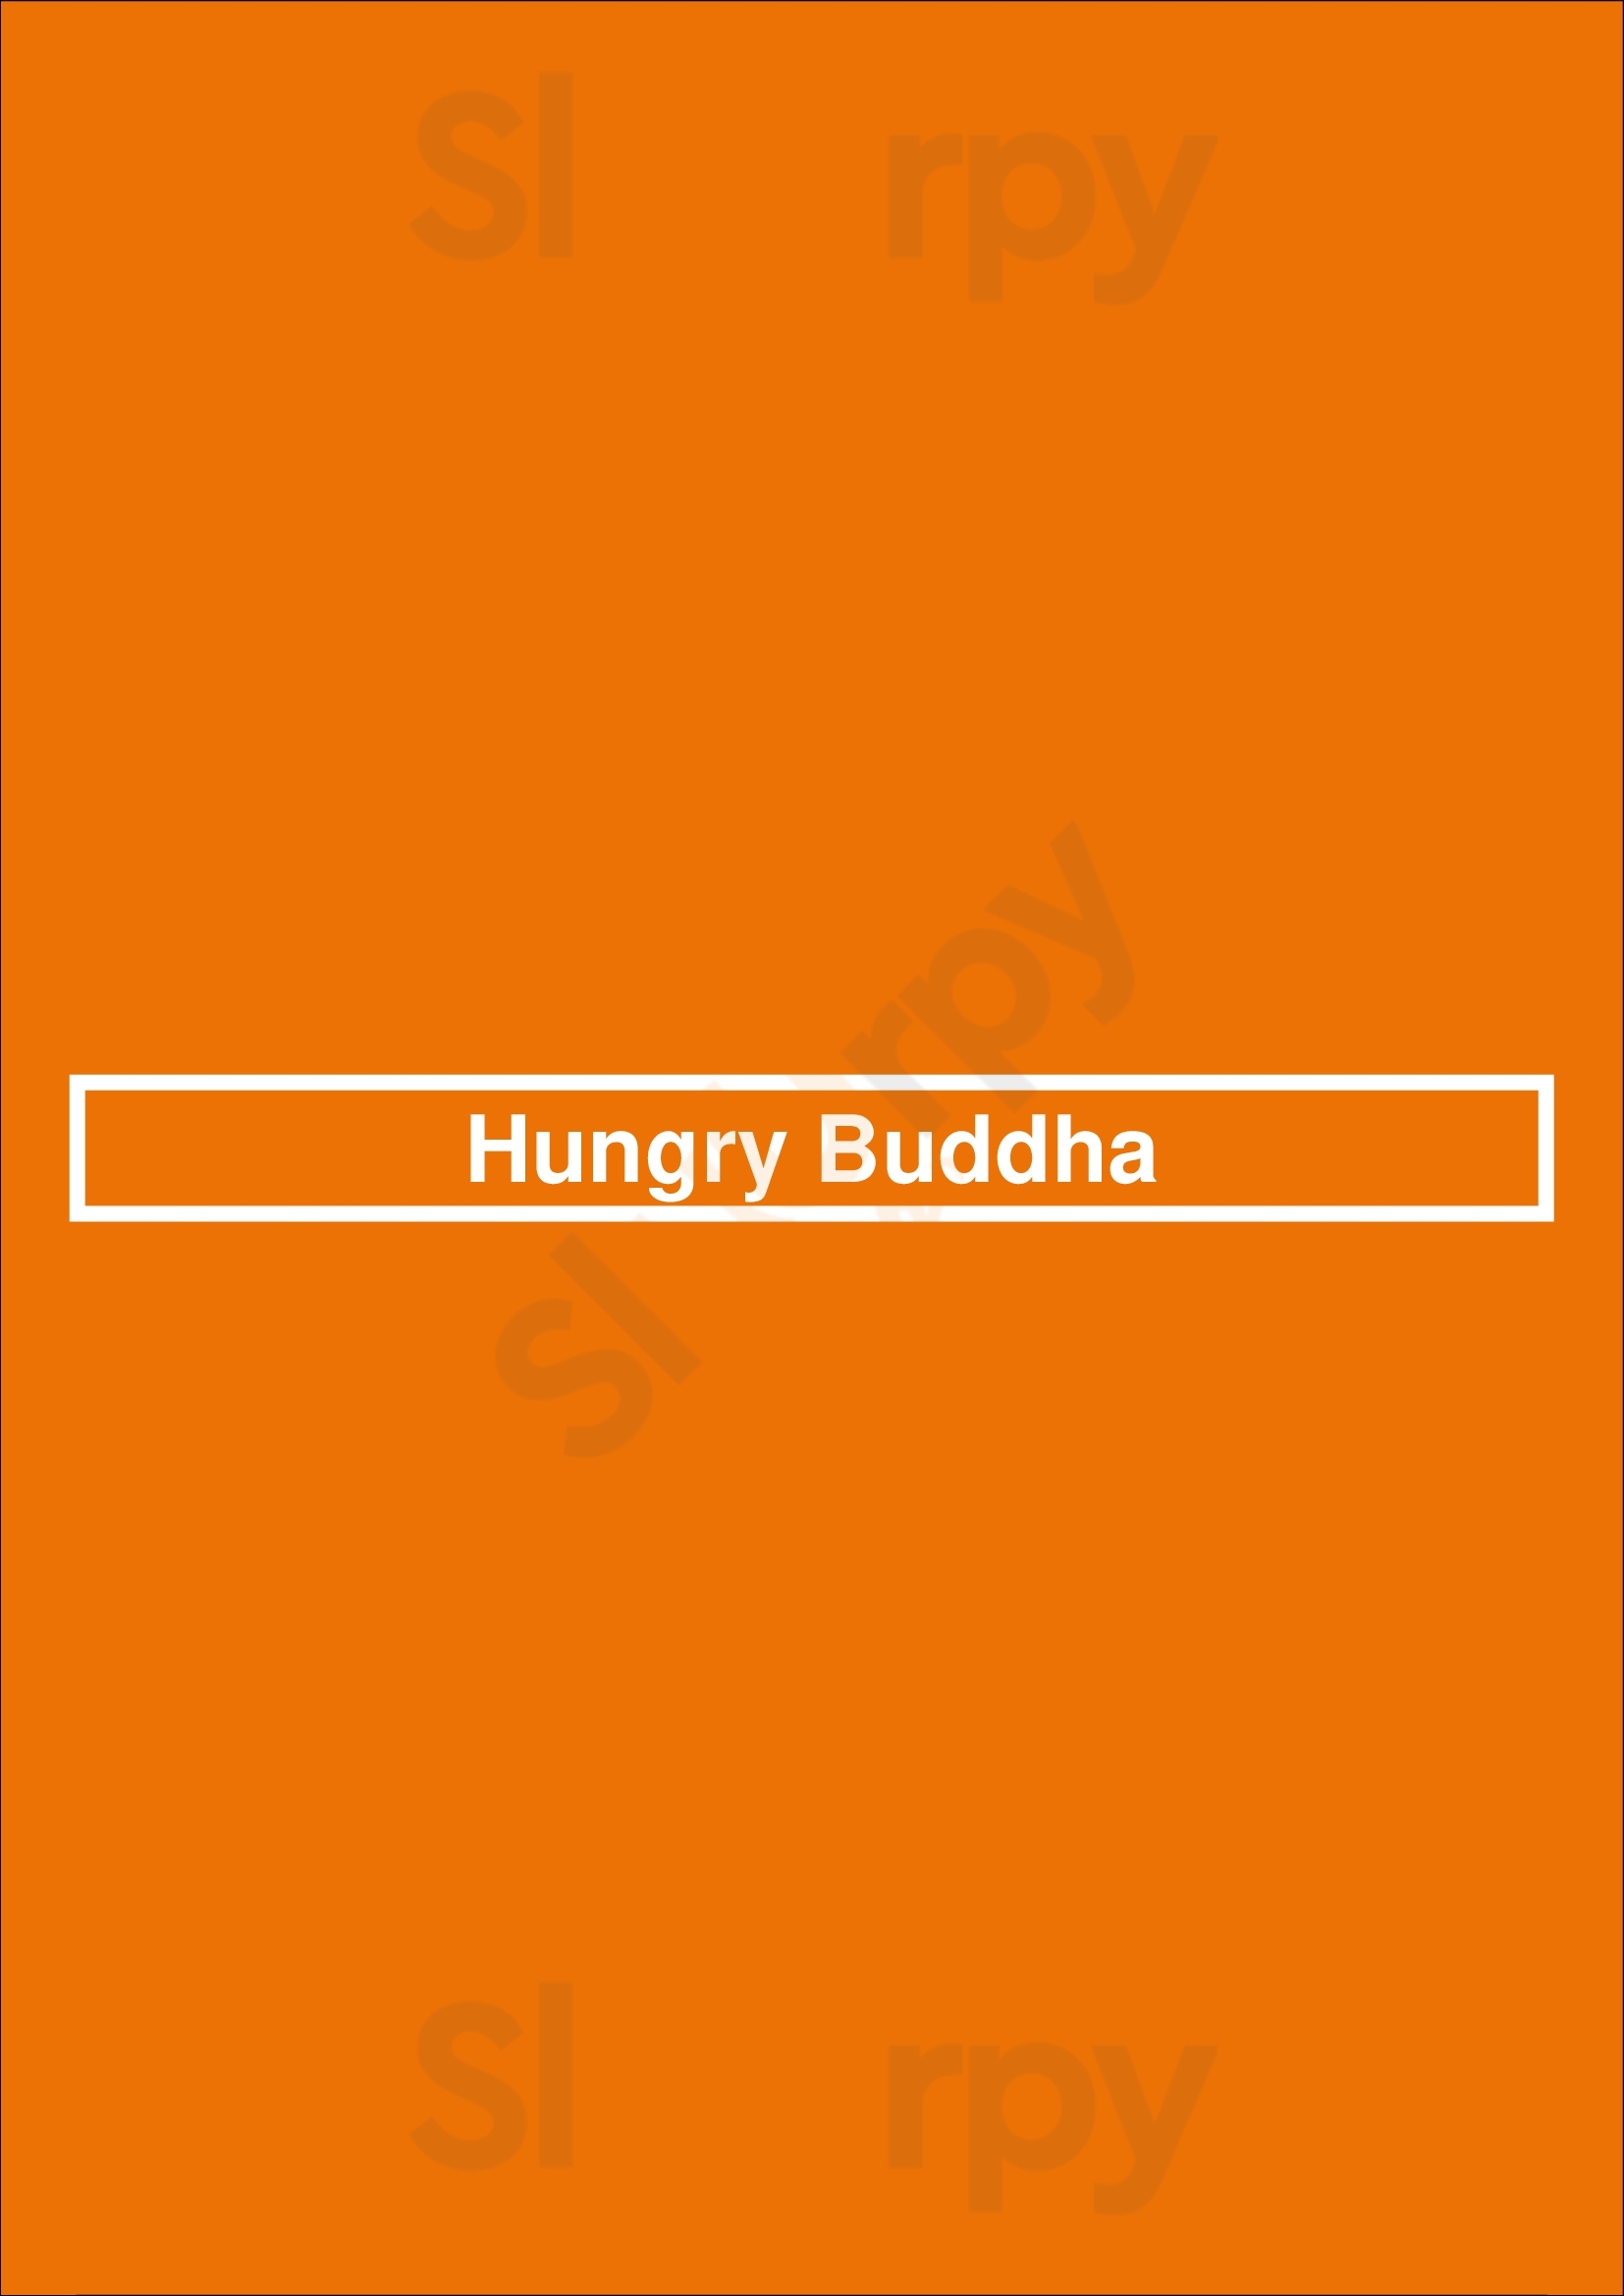 The Hungry Buddha London Menu - 1